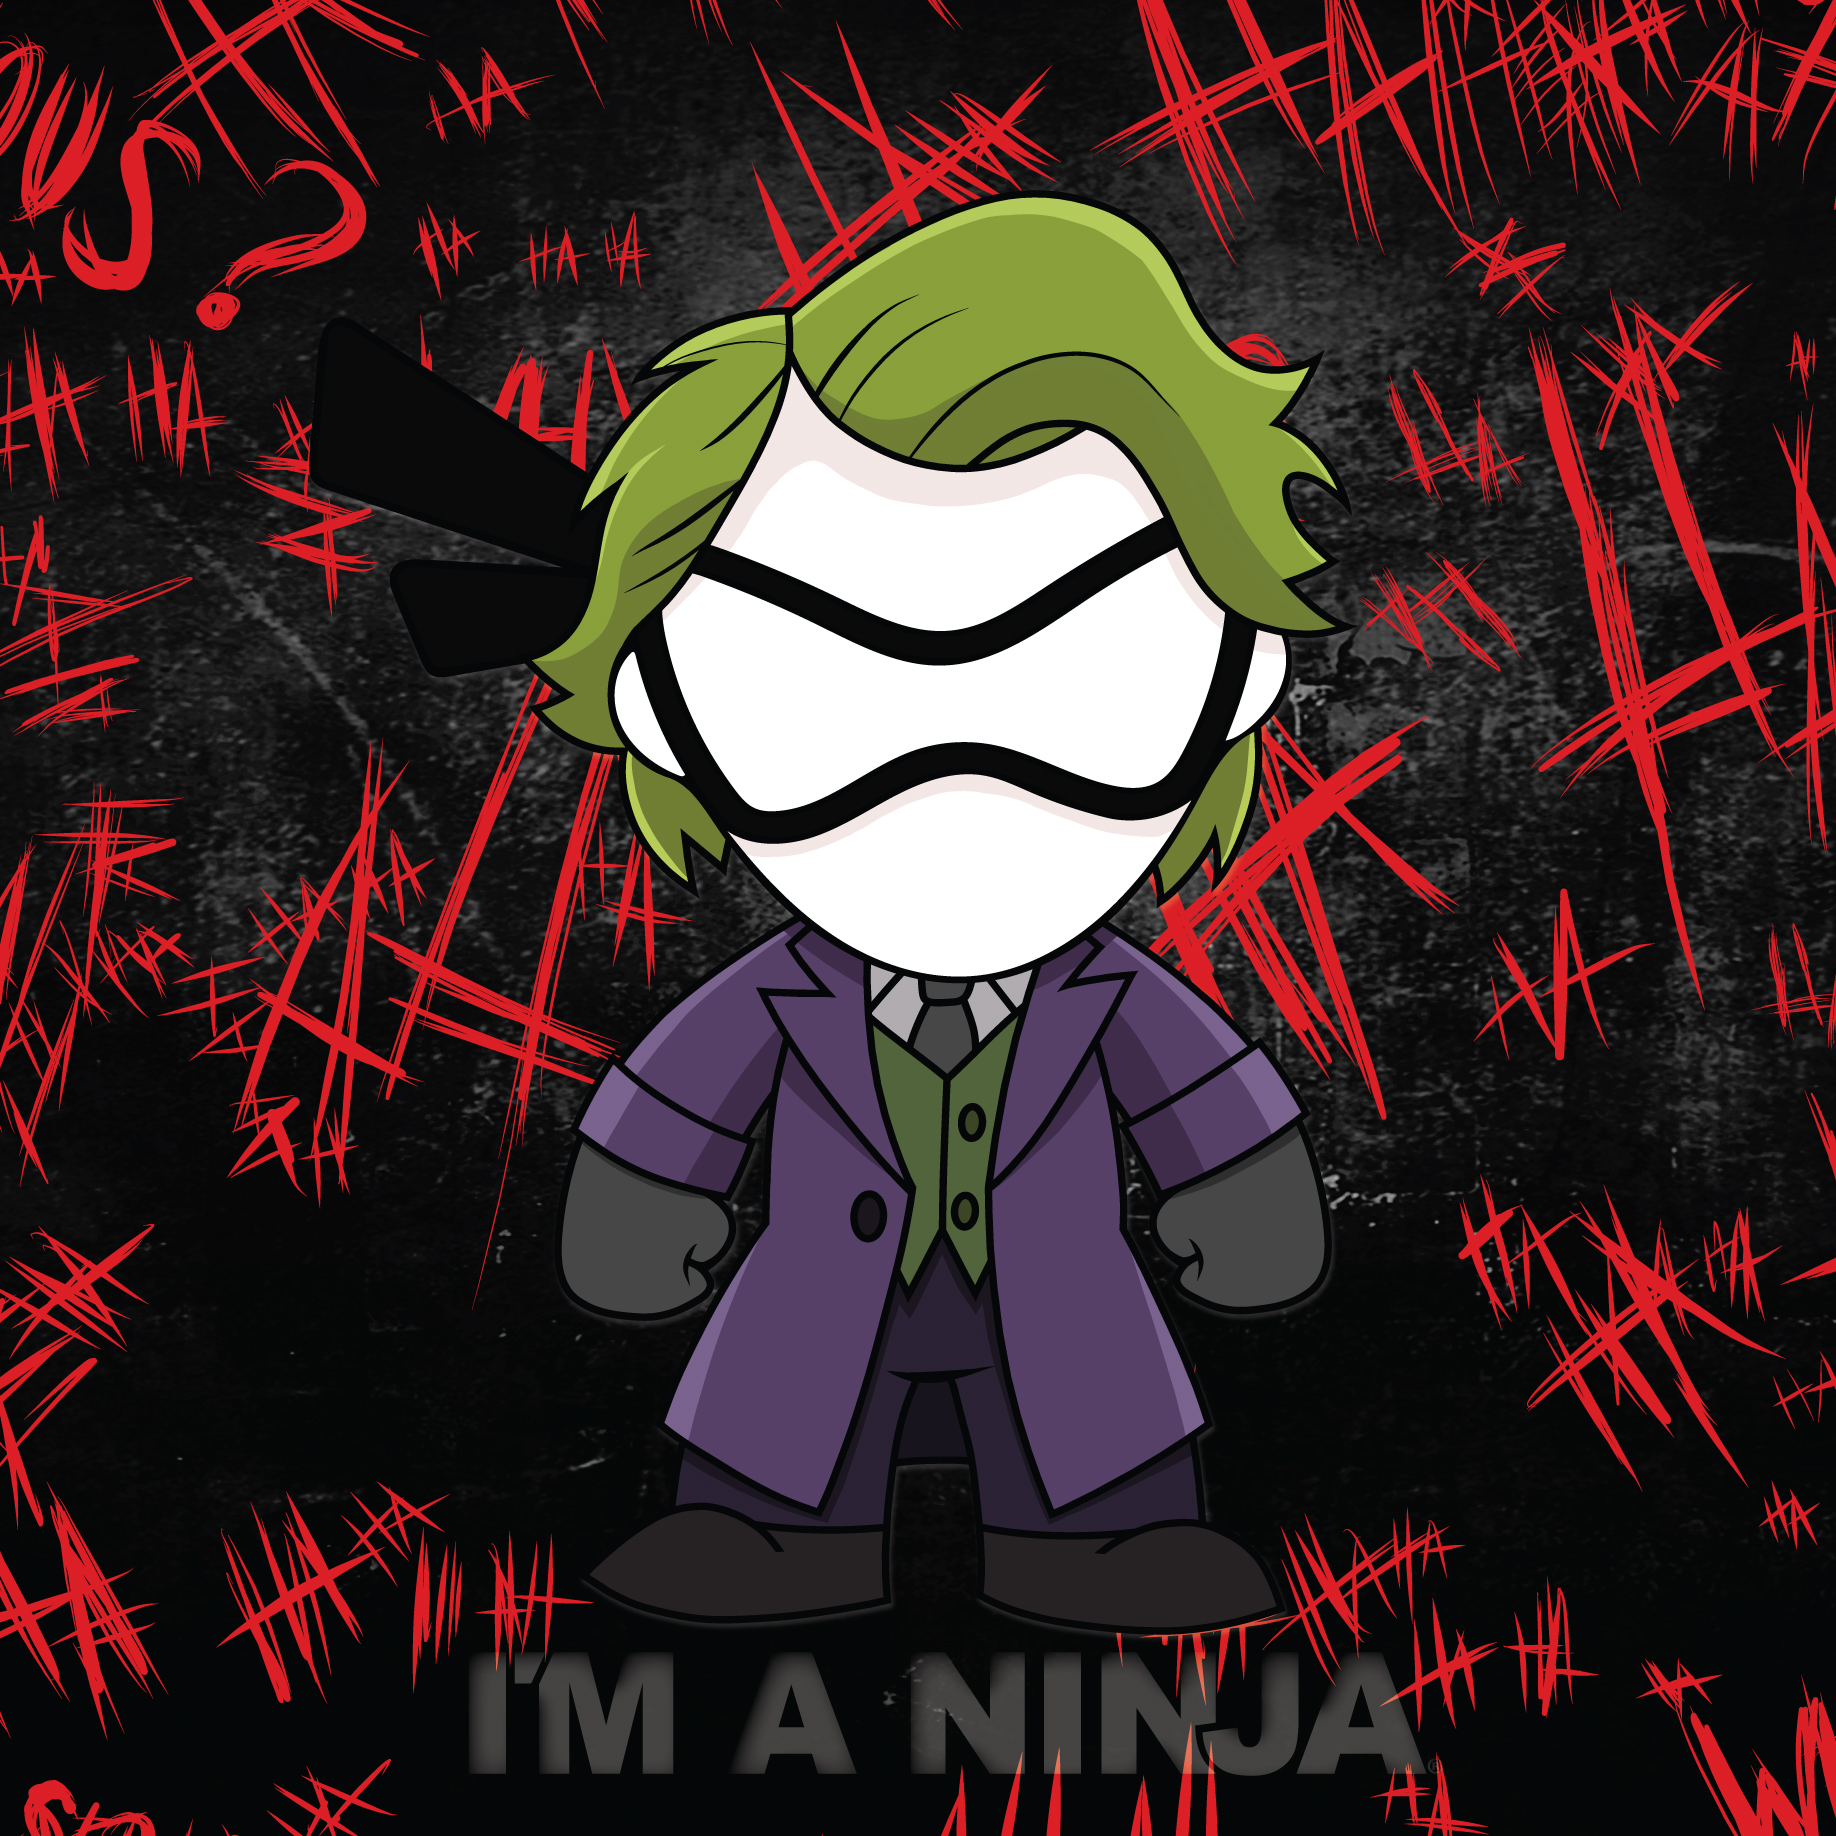 The Joker x I'M A NINJA